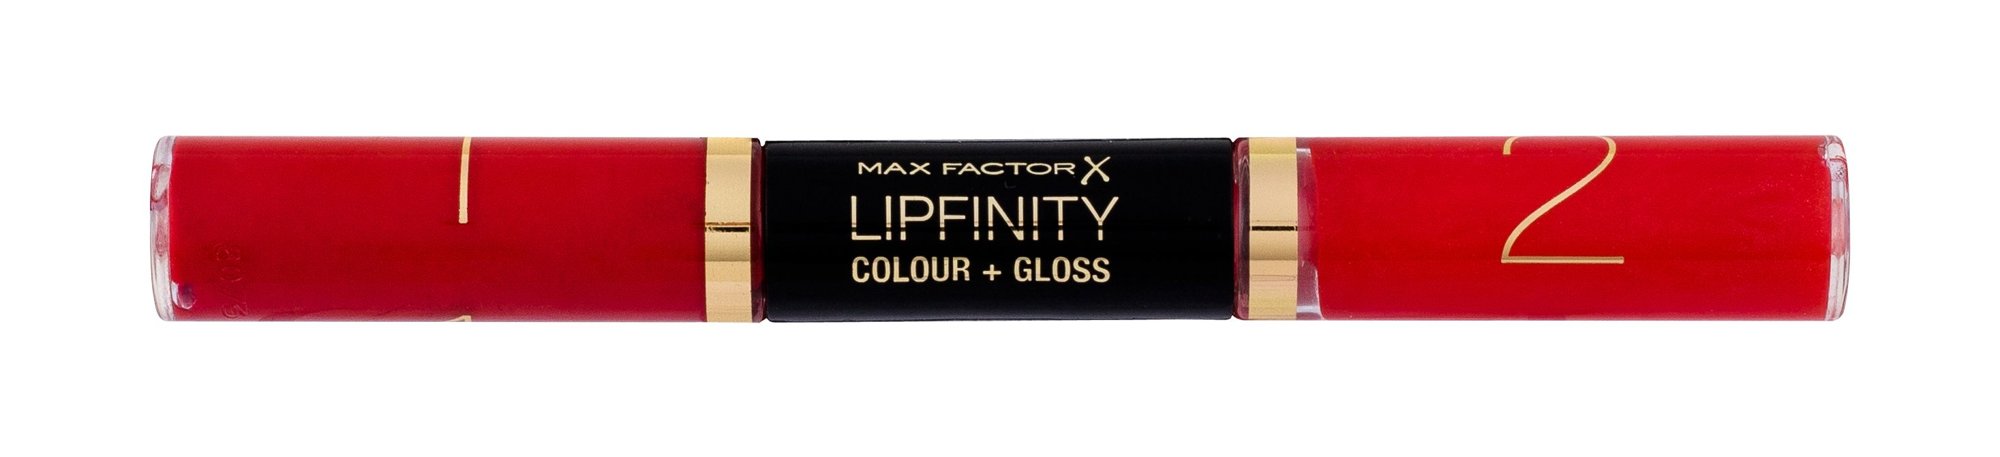 Max Factor Lipfinity